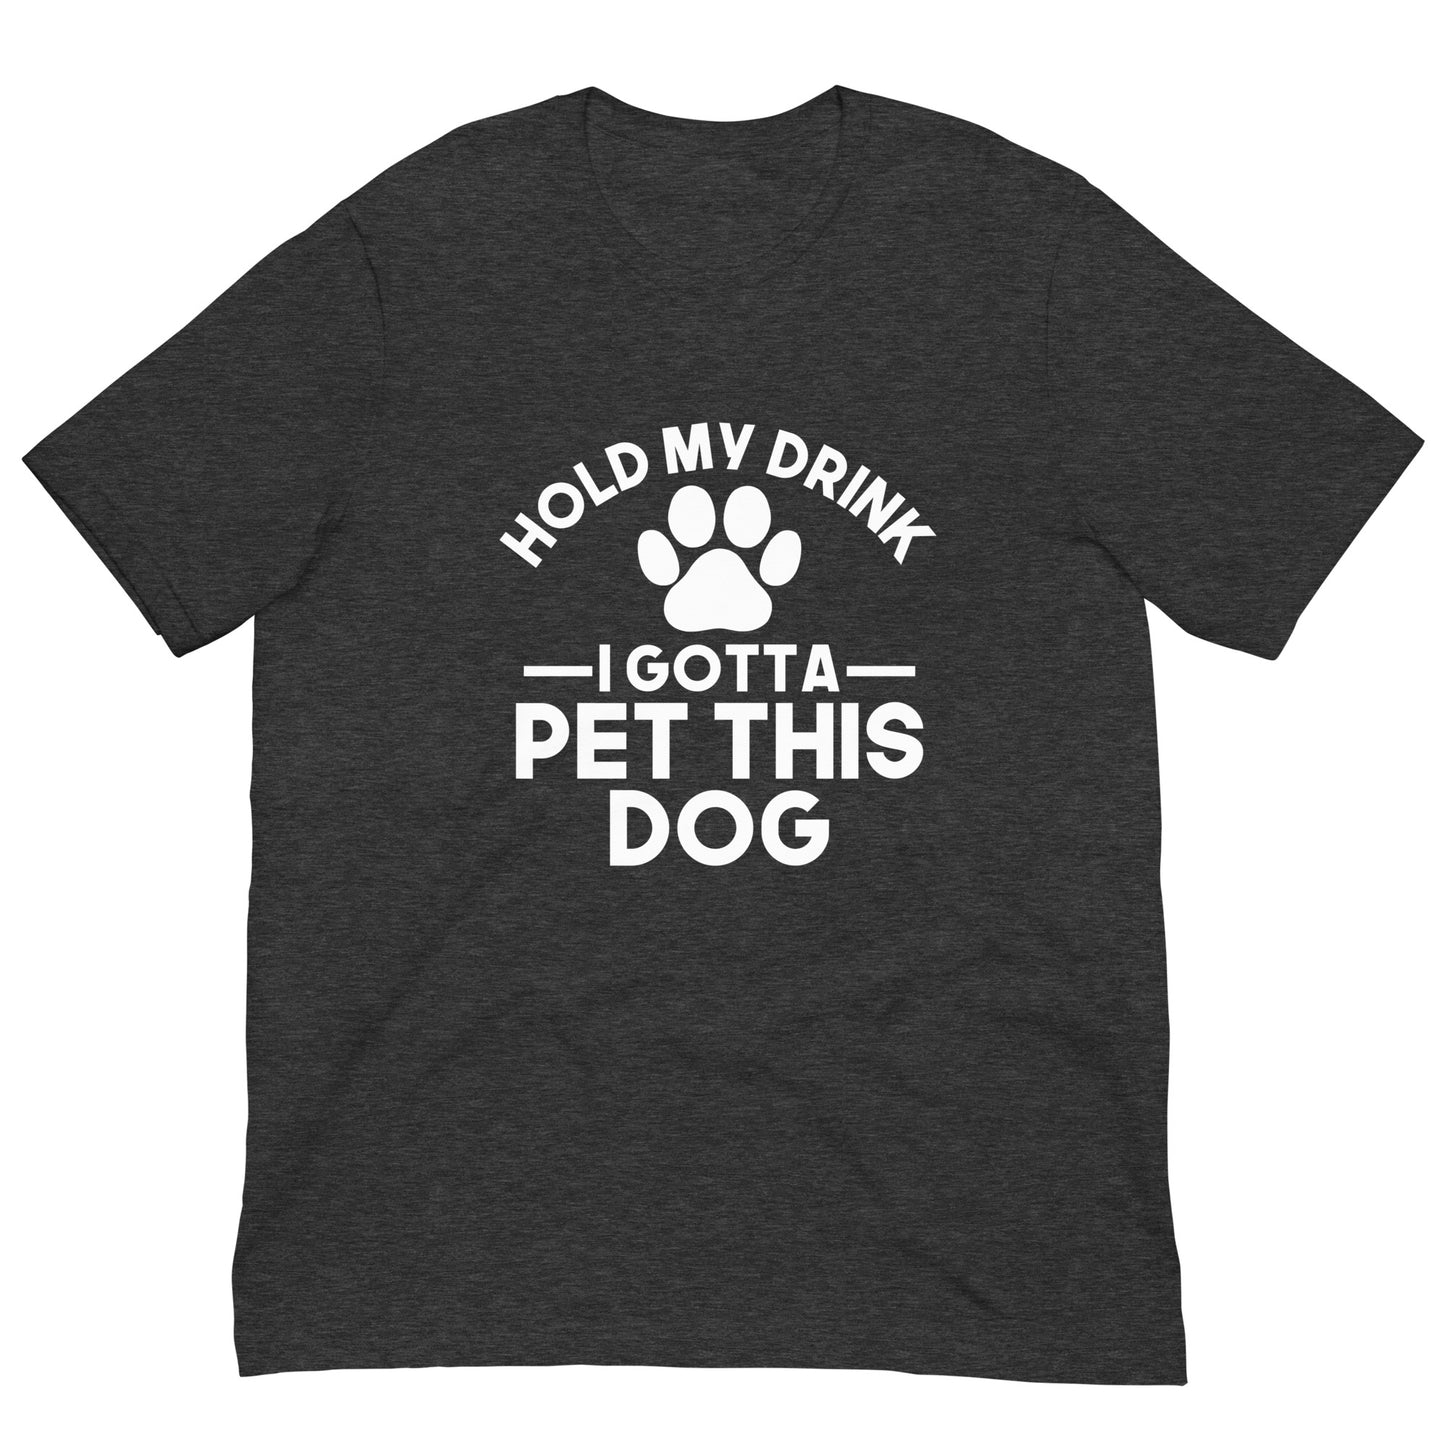 Hold my drink I gotta pet this dog T-shirt